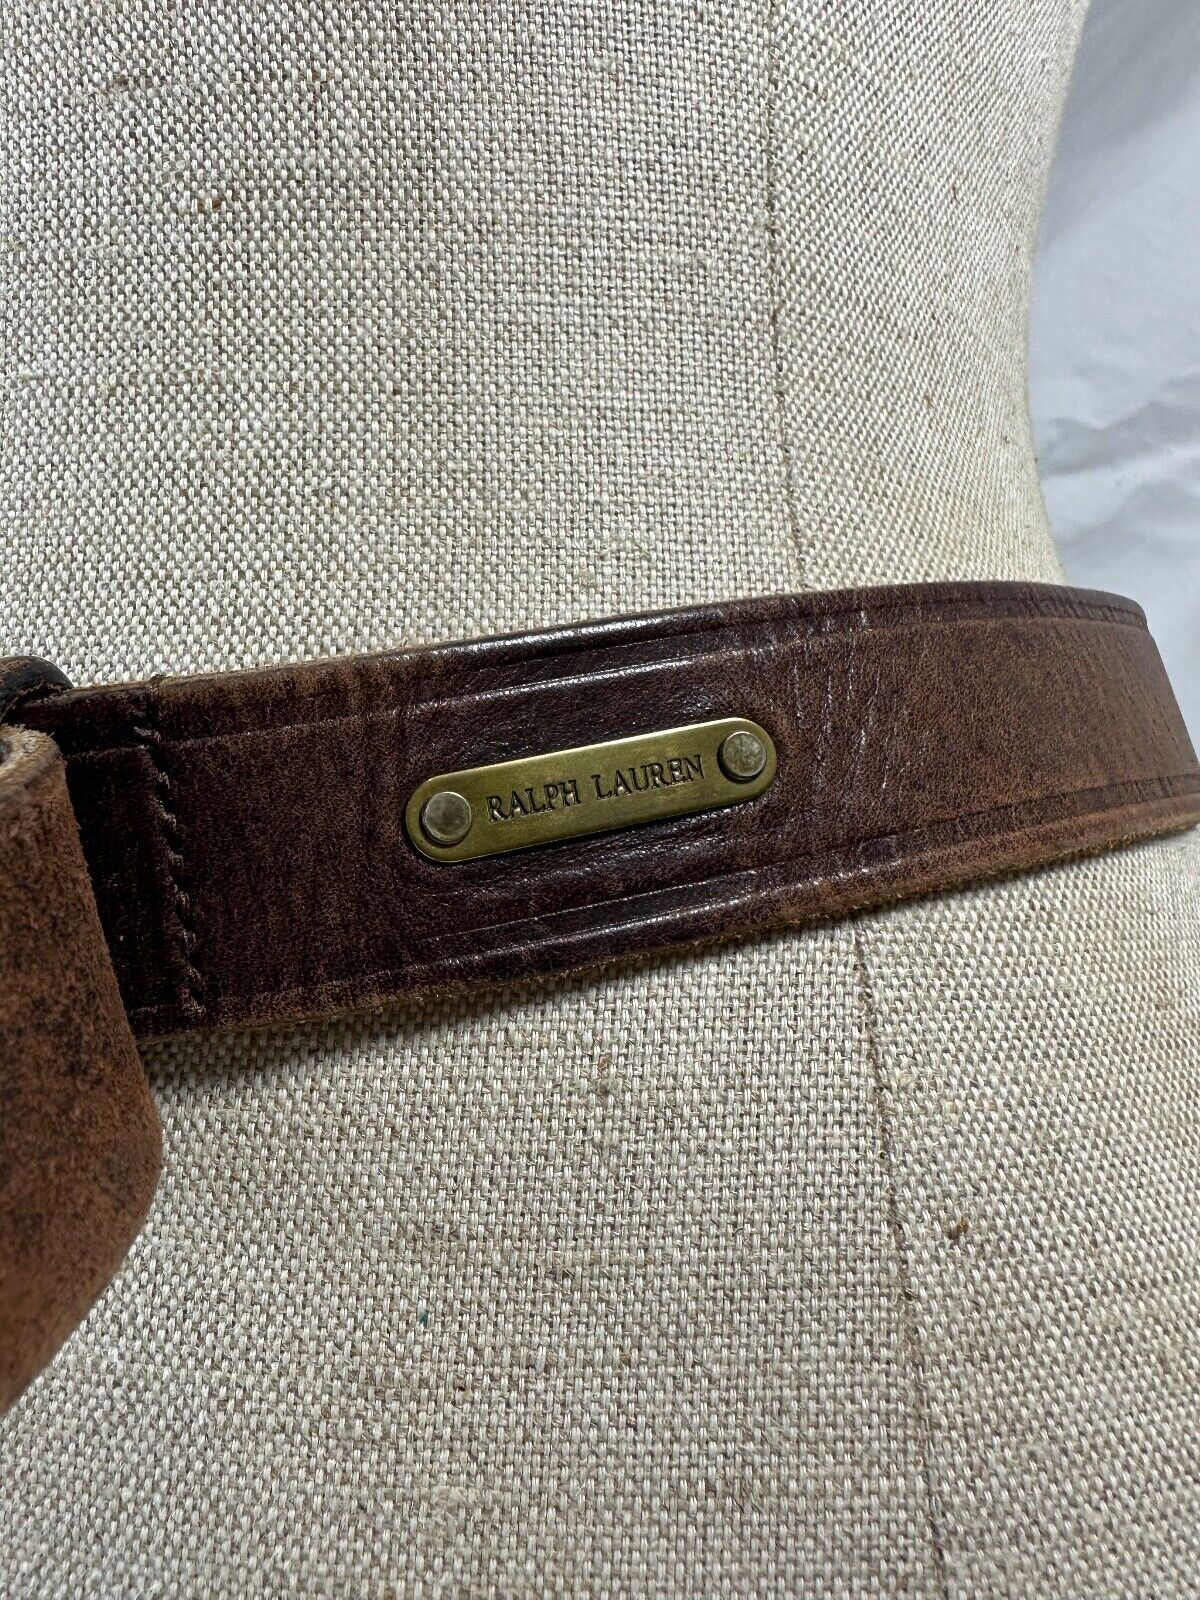 Genuine POLO Ralph Lauren vintage brown leather b… - image 7